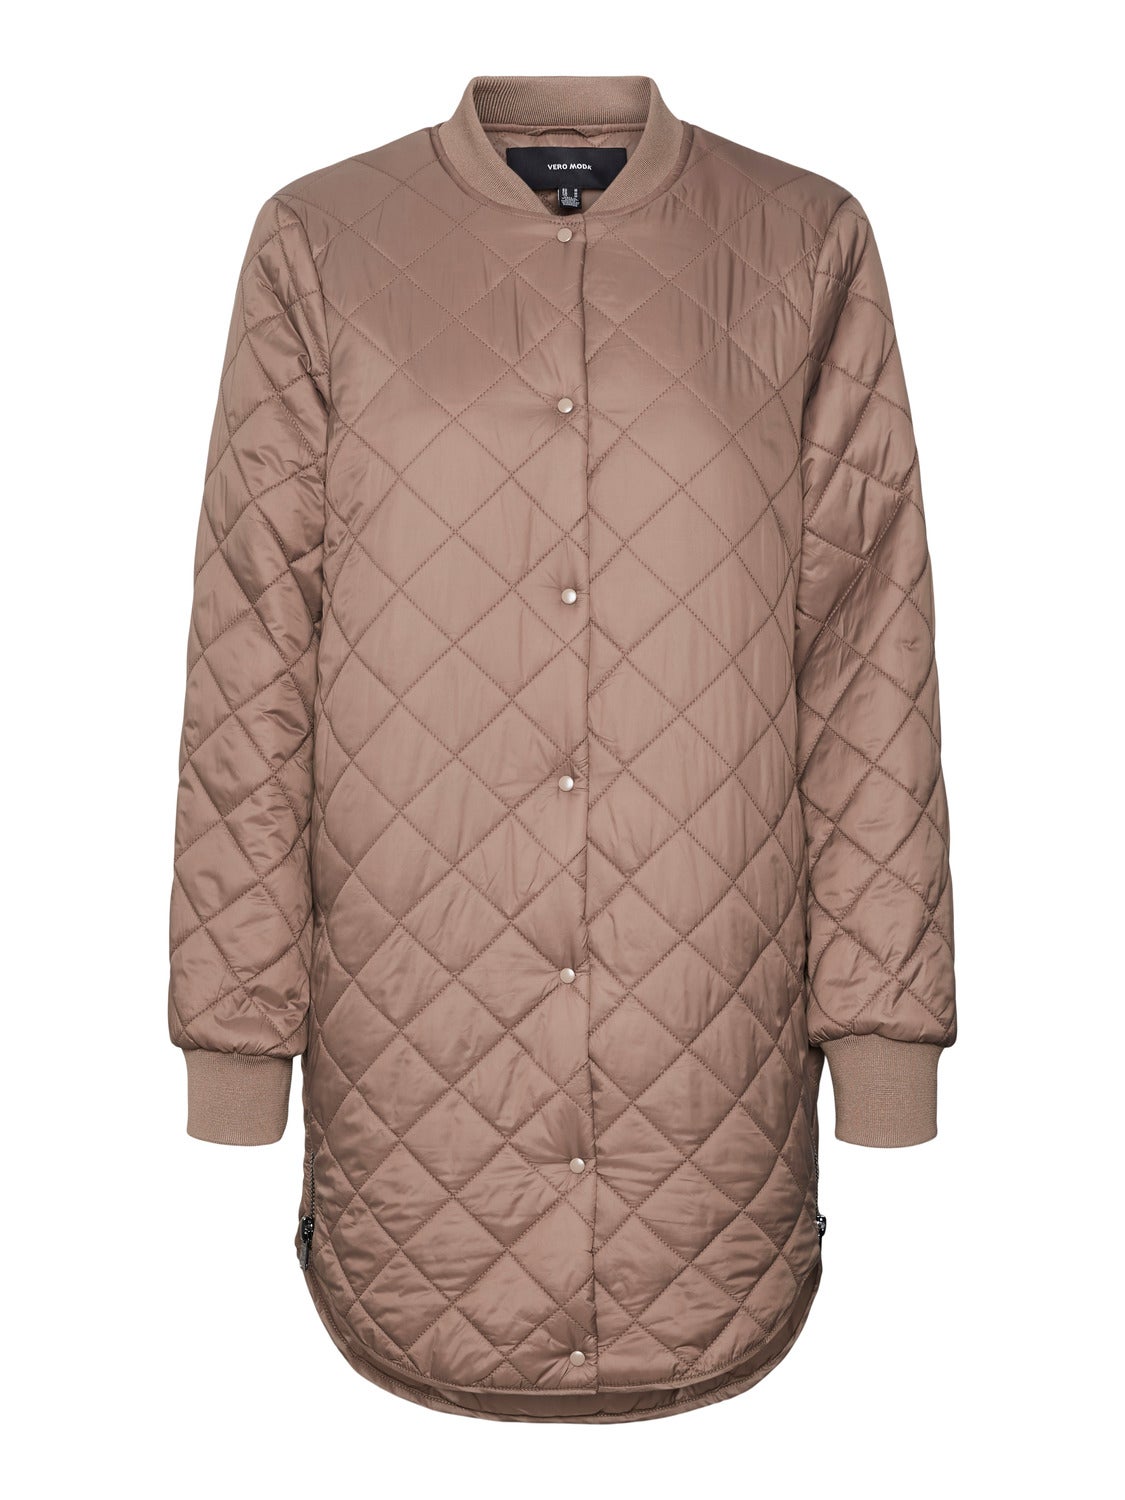 VMHAYLE Coat with 50% | Moda® Vero discount